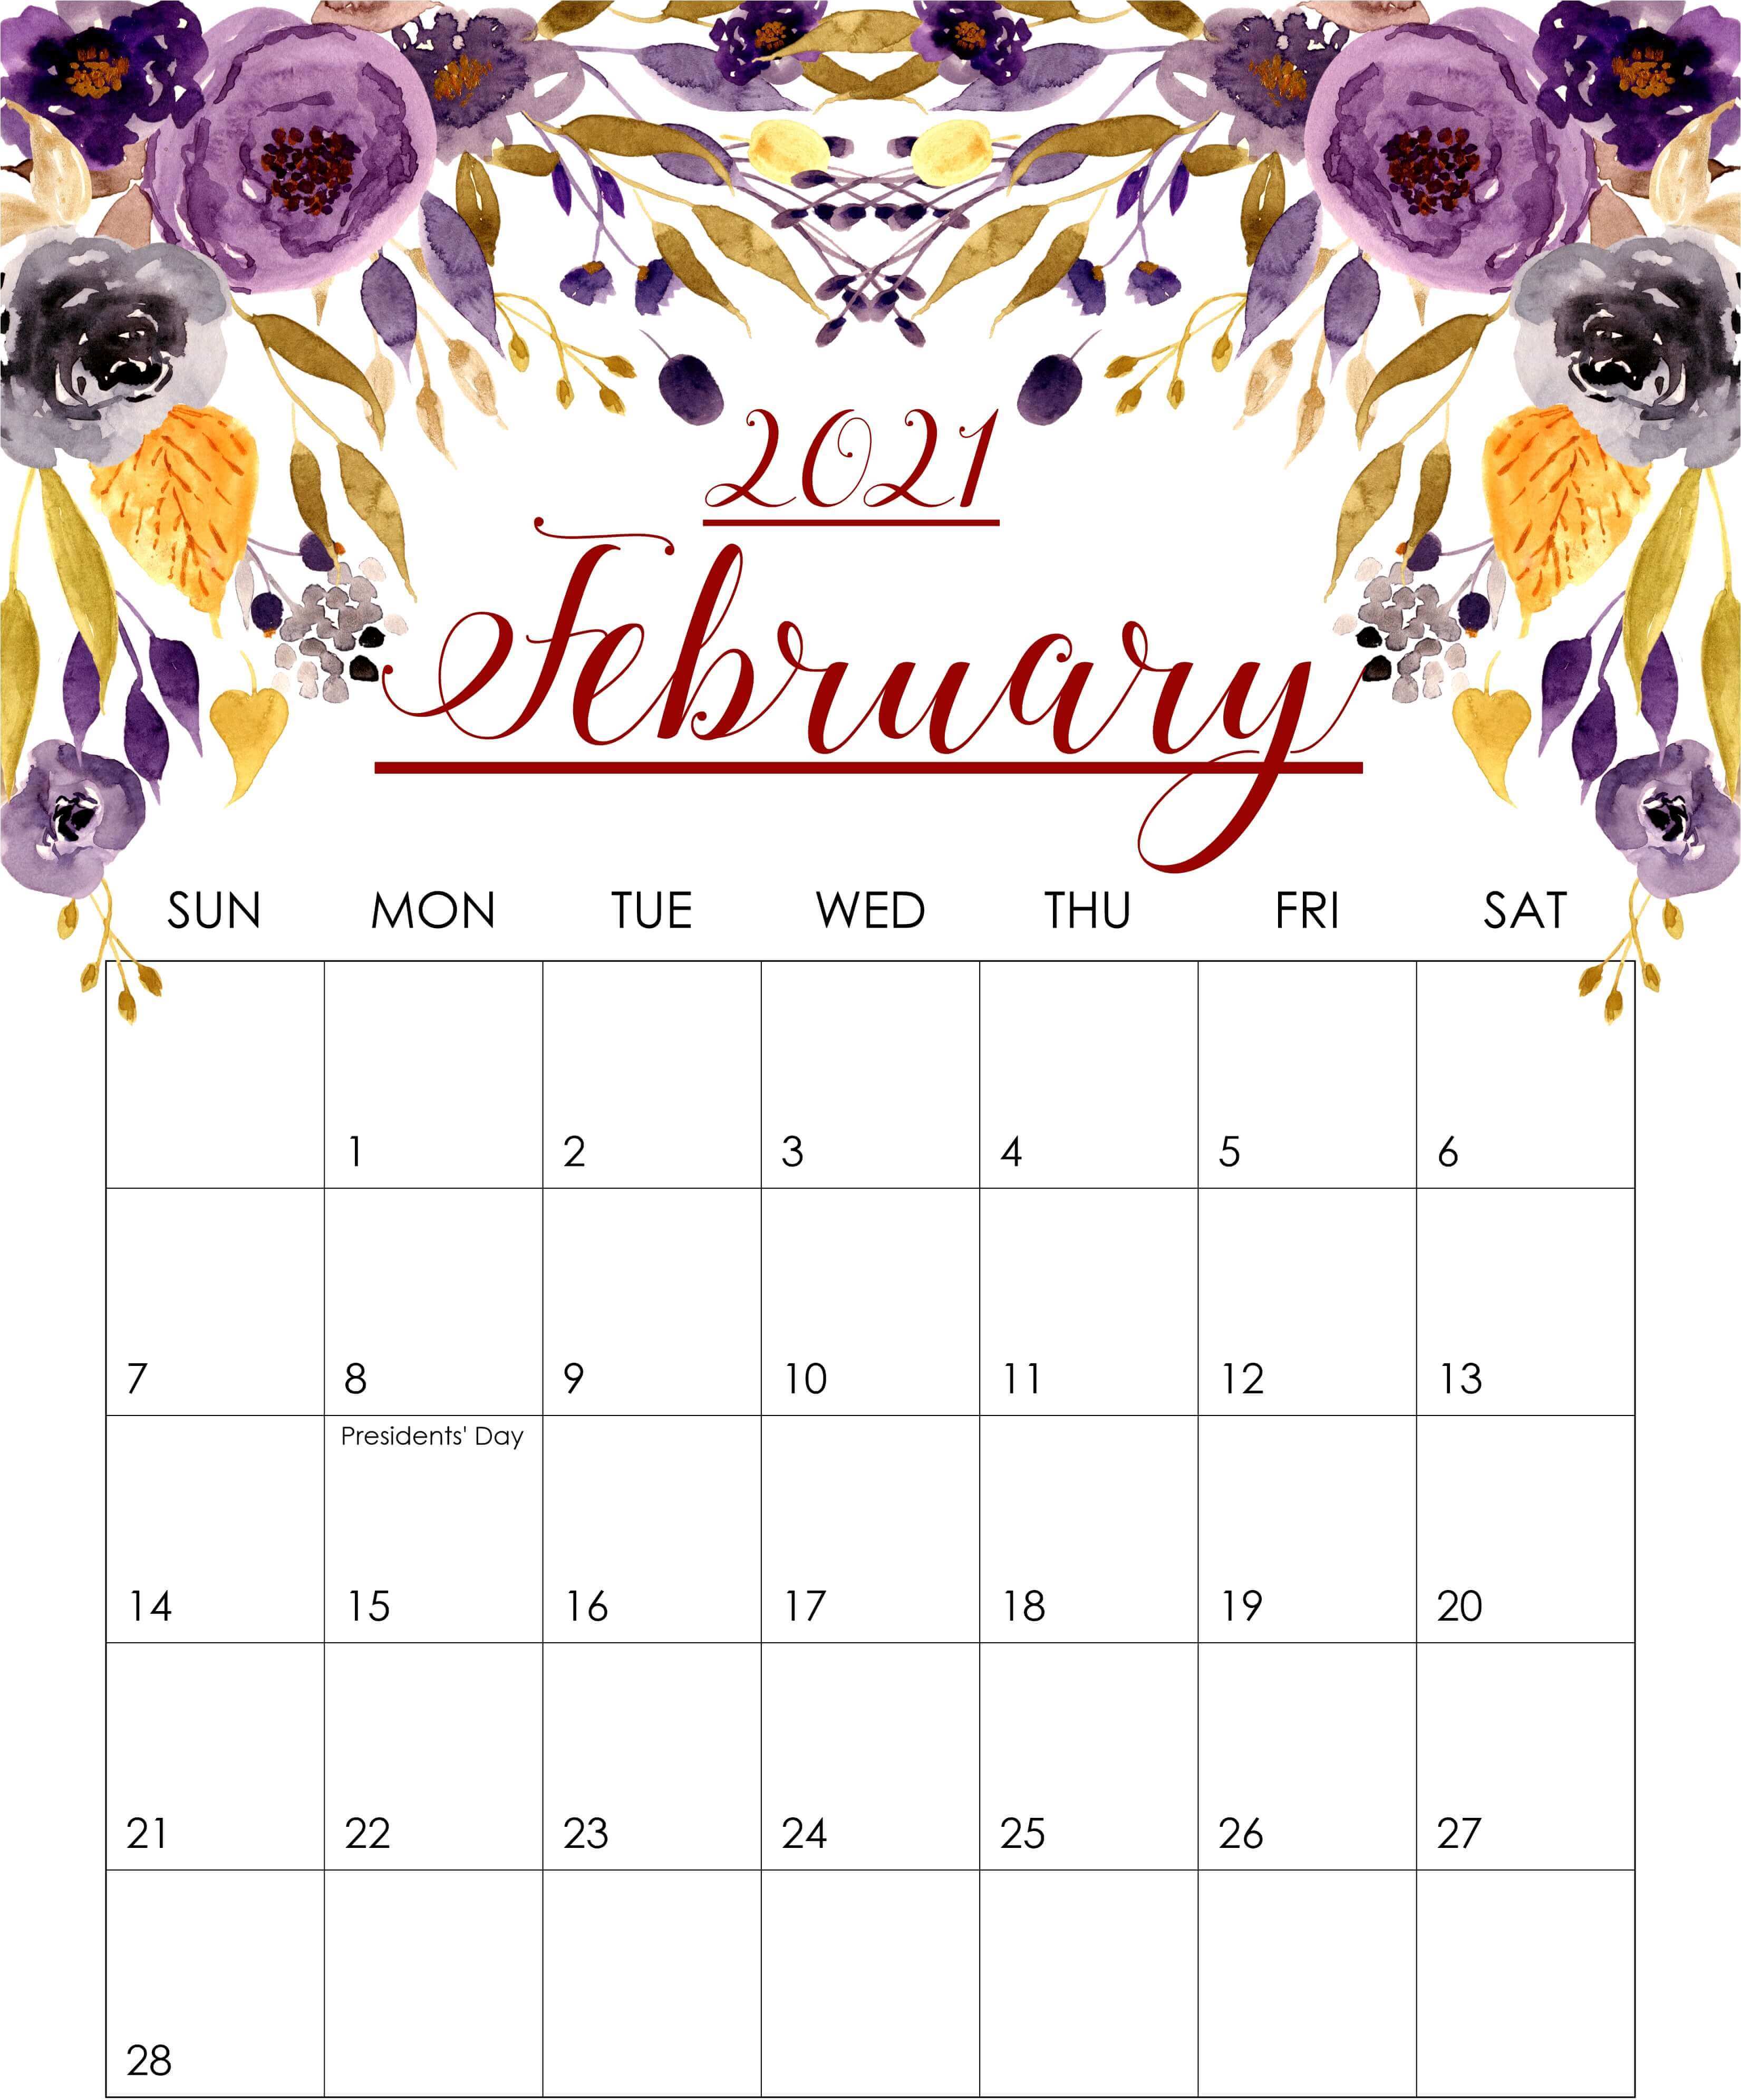 Decorative February 2021 Calendar Floral